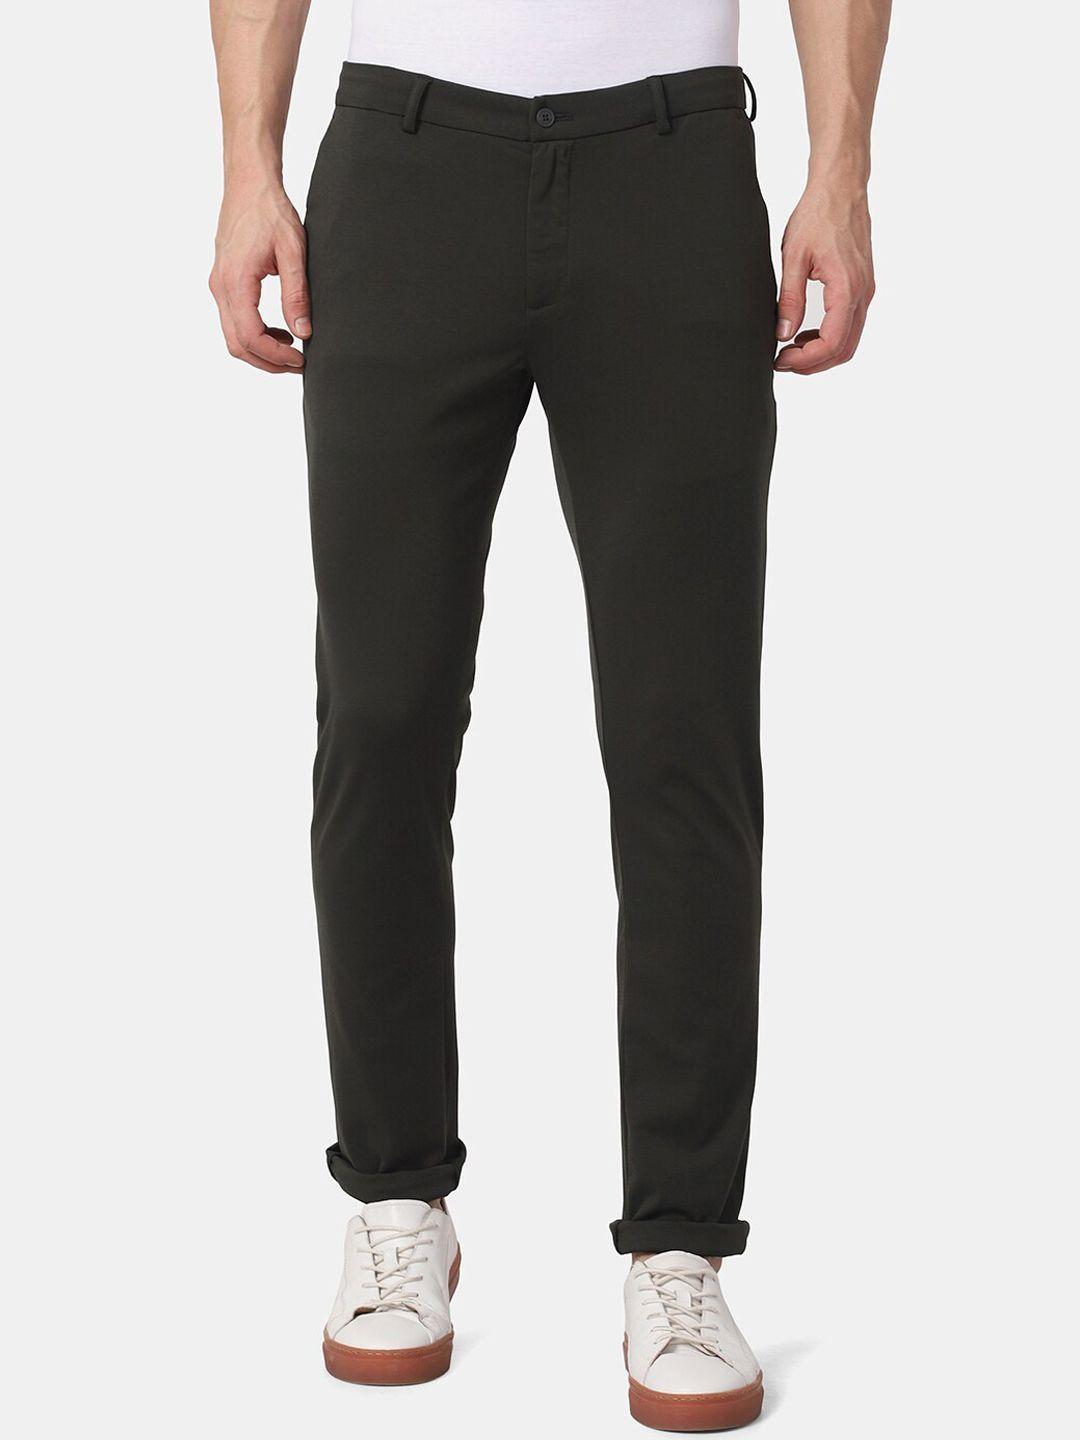 blackberrys techpro collection men green slim fit low-rise trousers